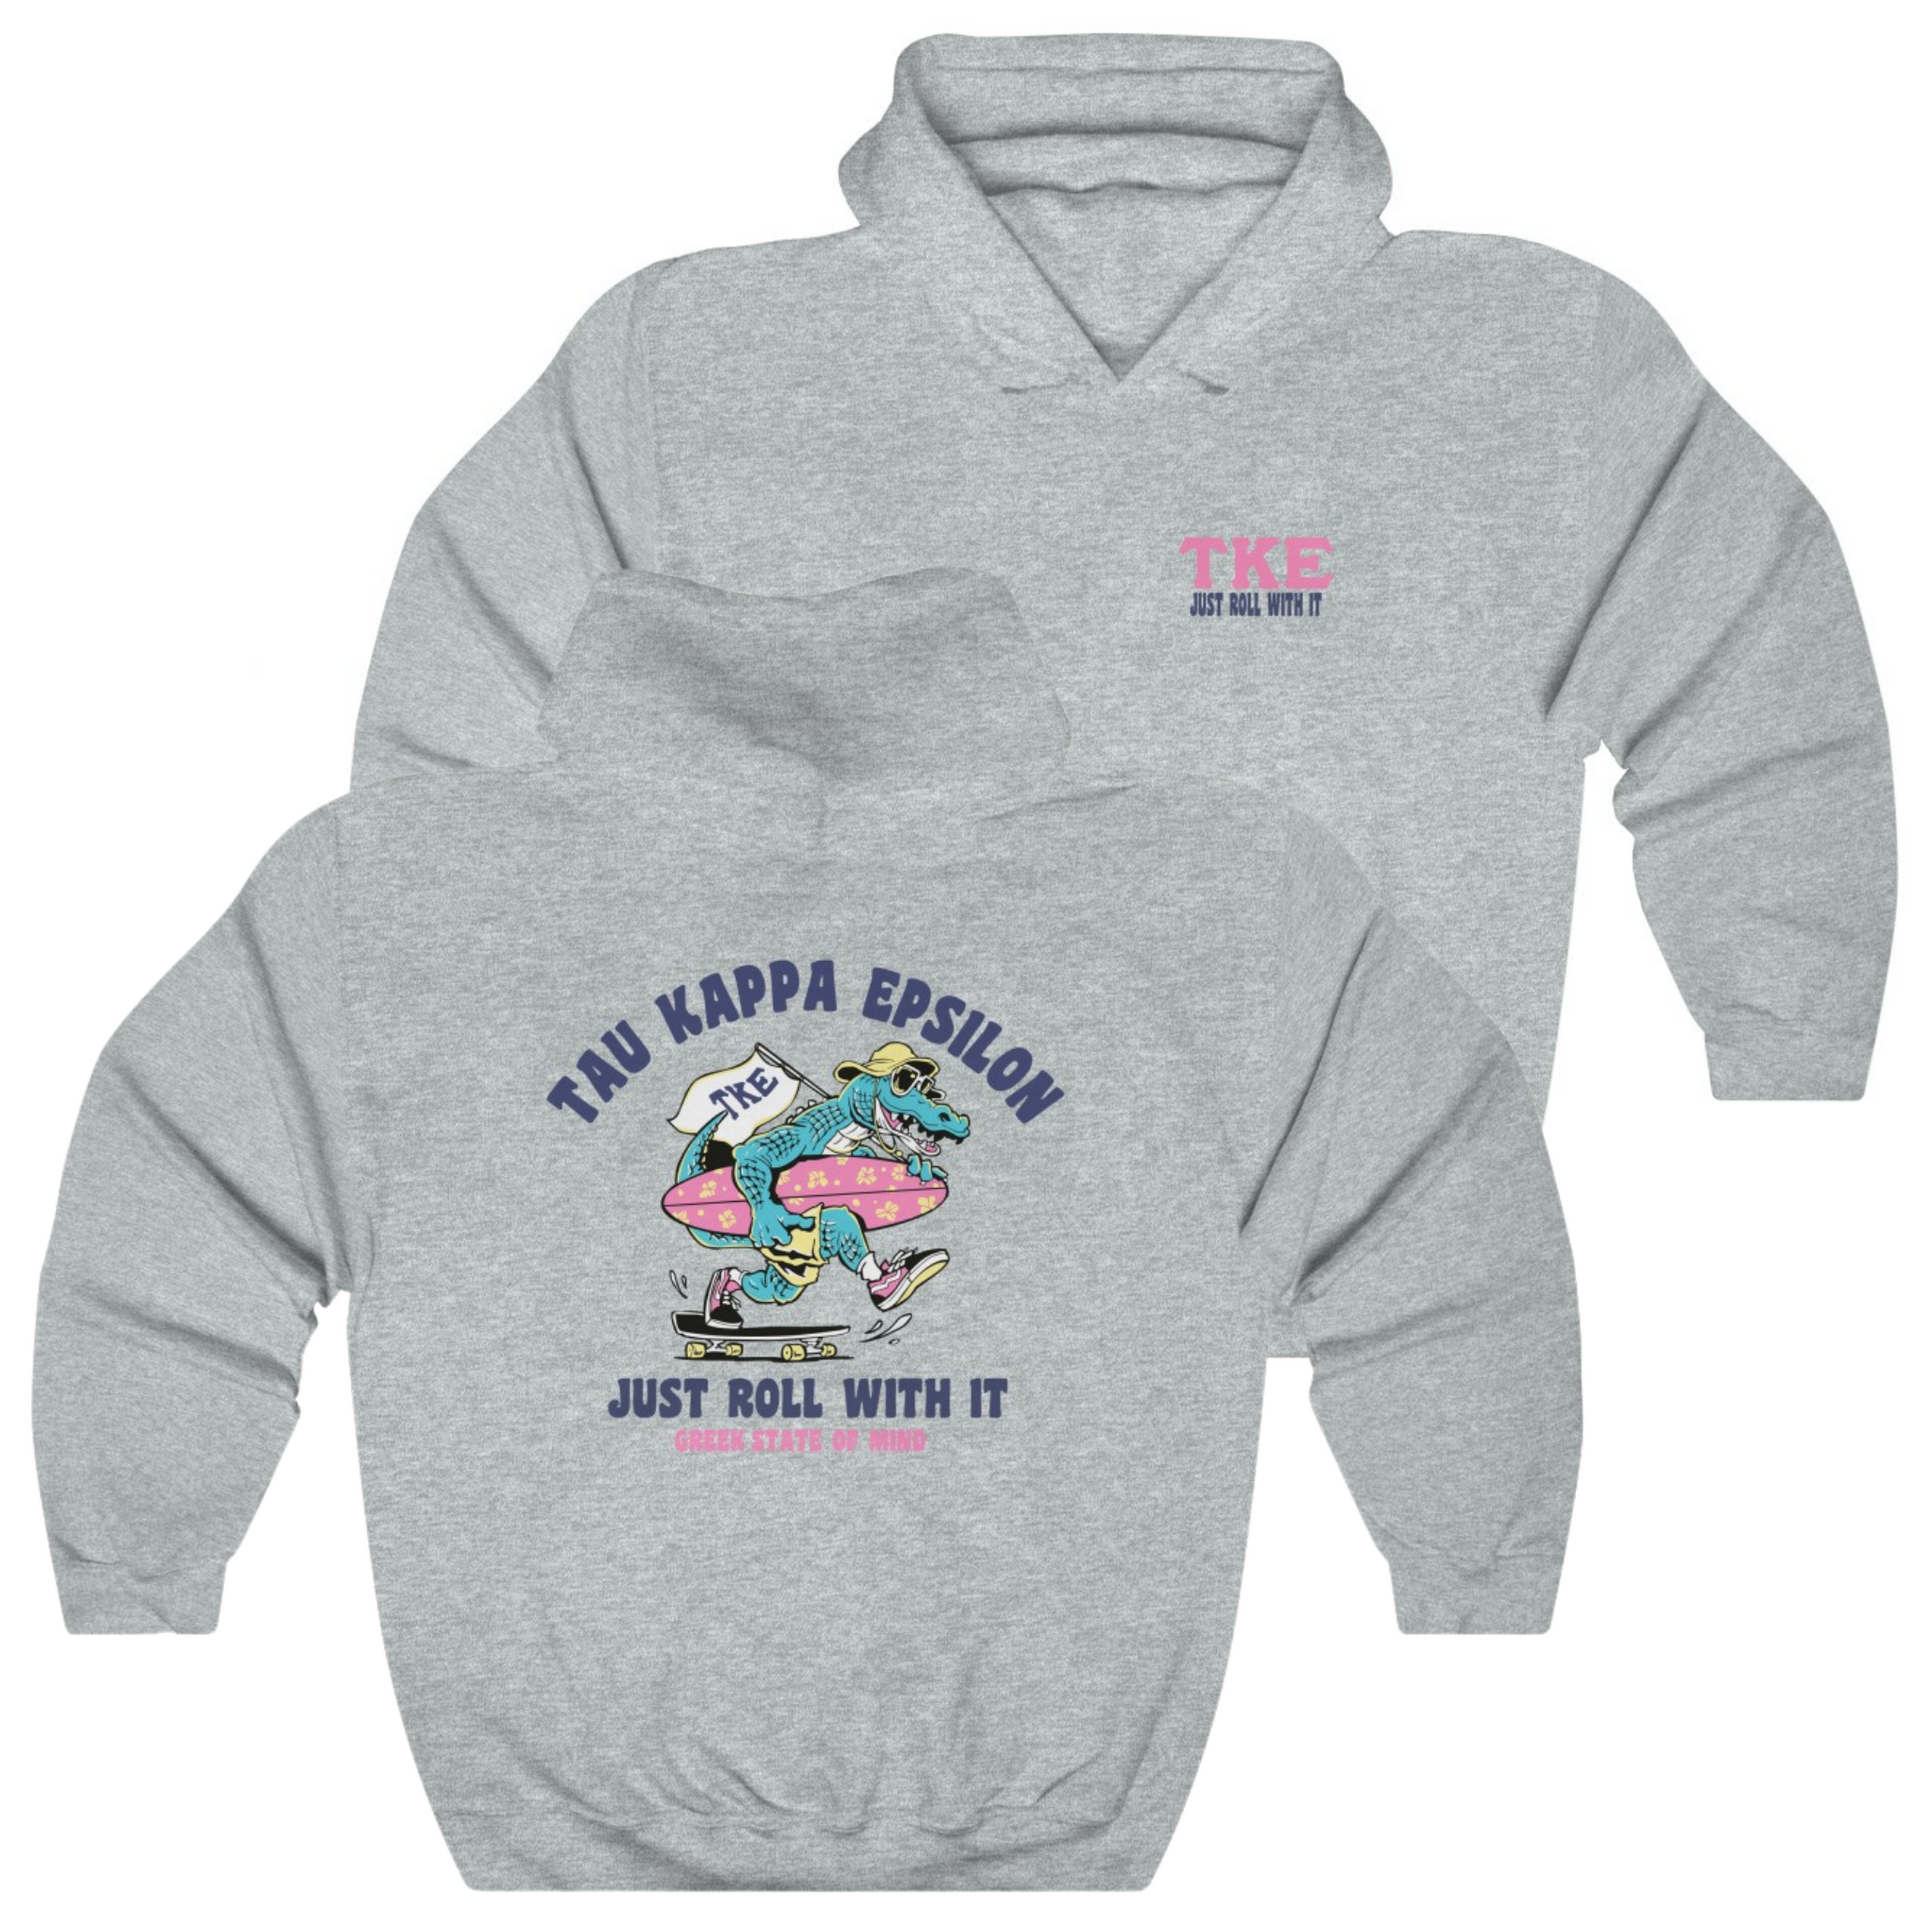 Grey Tau Kappa Epsilon Graphic Hoodie | Alligator Skater | TKE Clothing and Merchandise